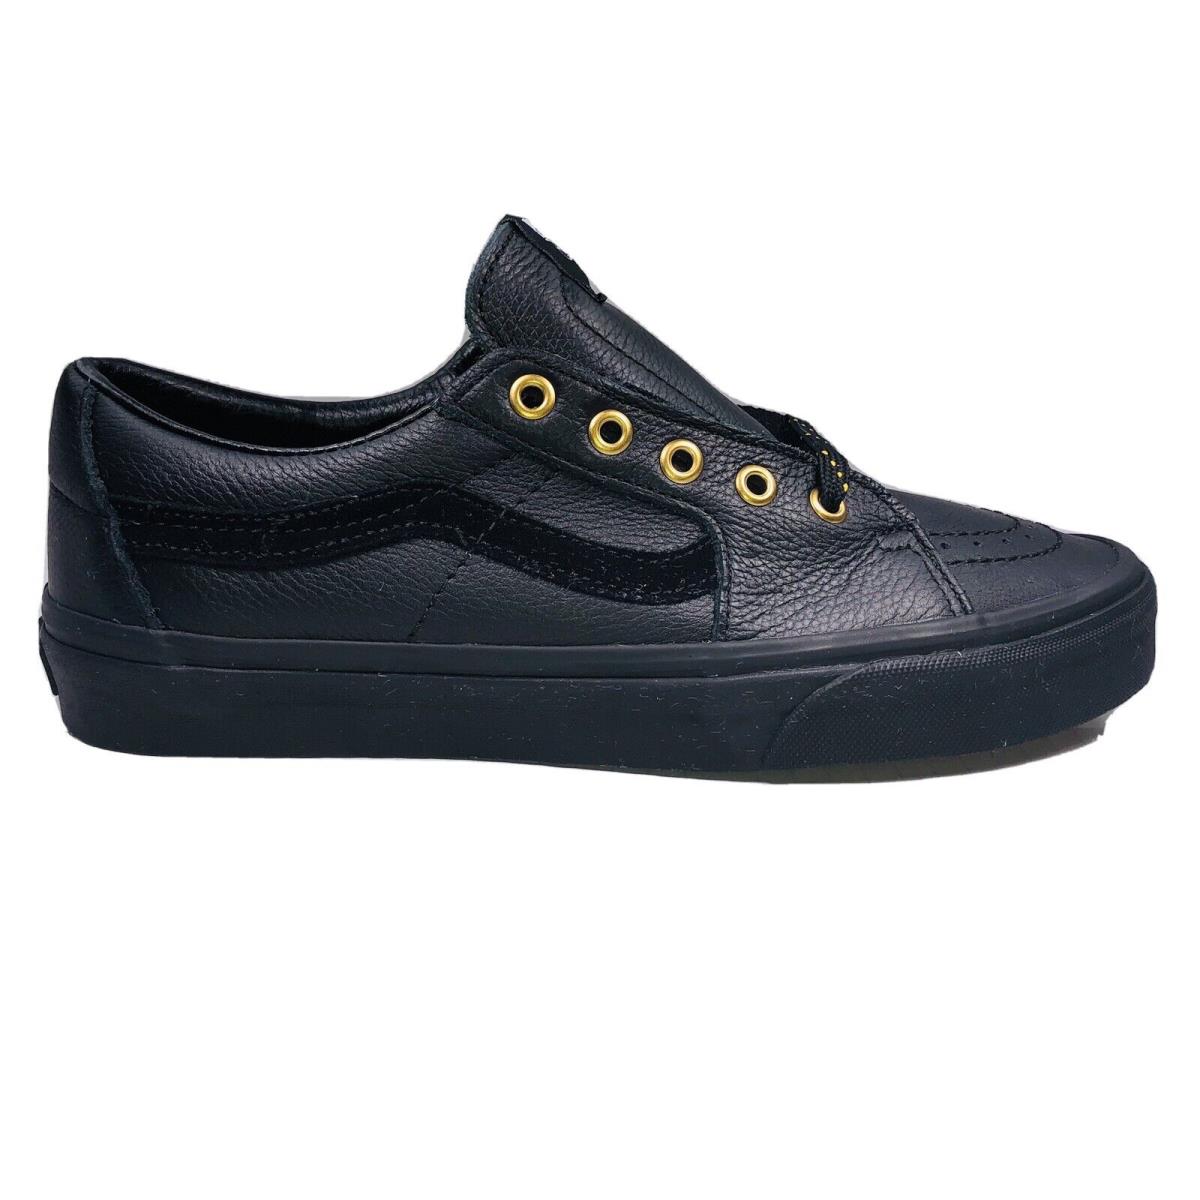 Vans SK8 Low Mens Size 8.5 Vault Leather Black Gold Skateboarding Sneakers